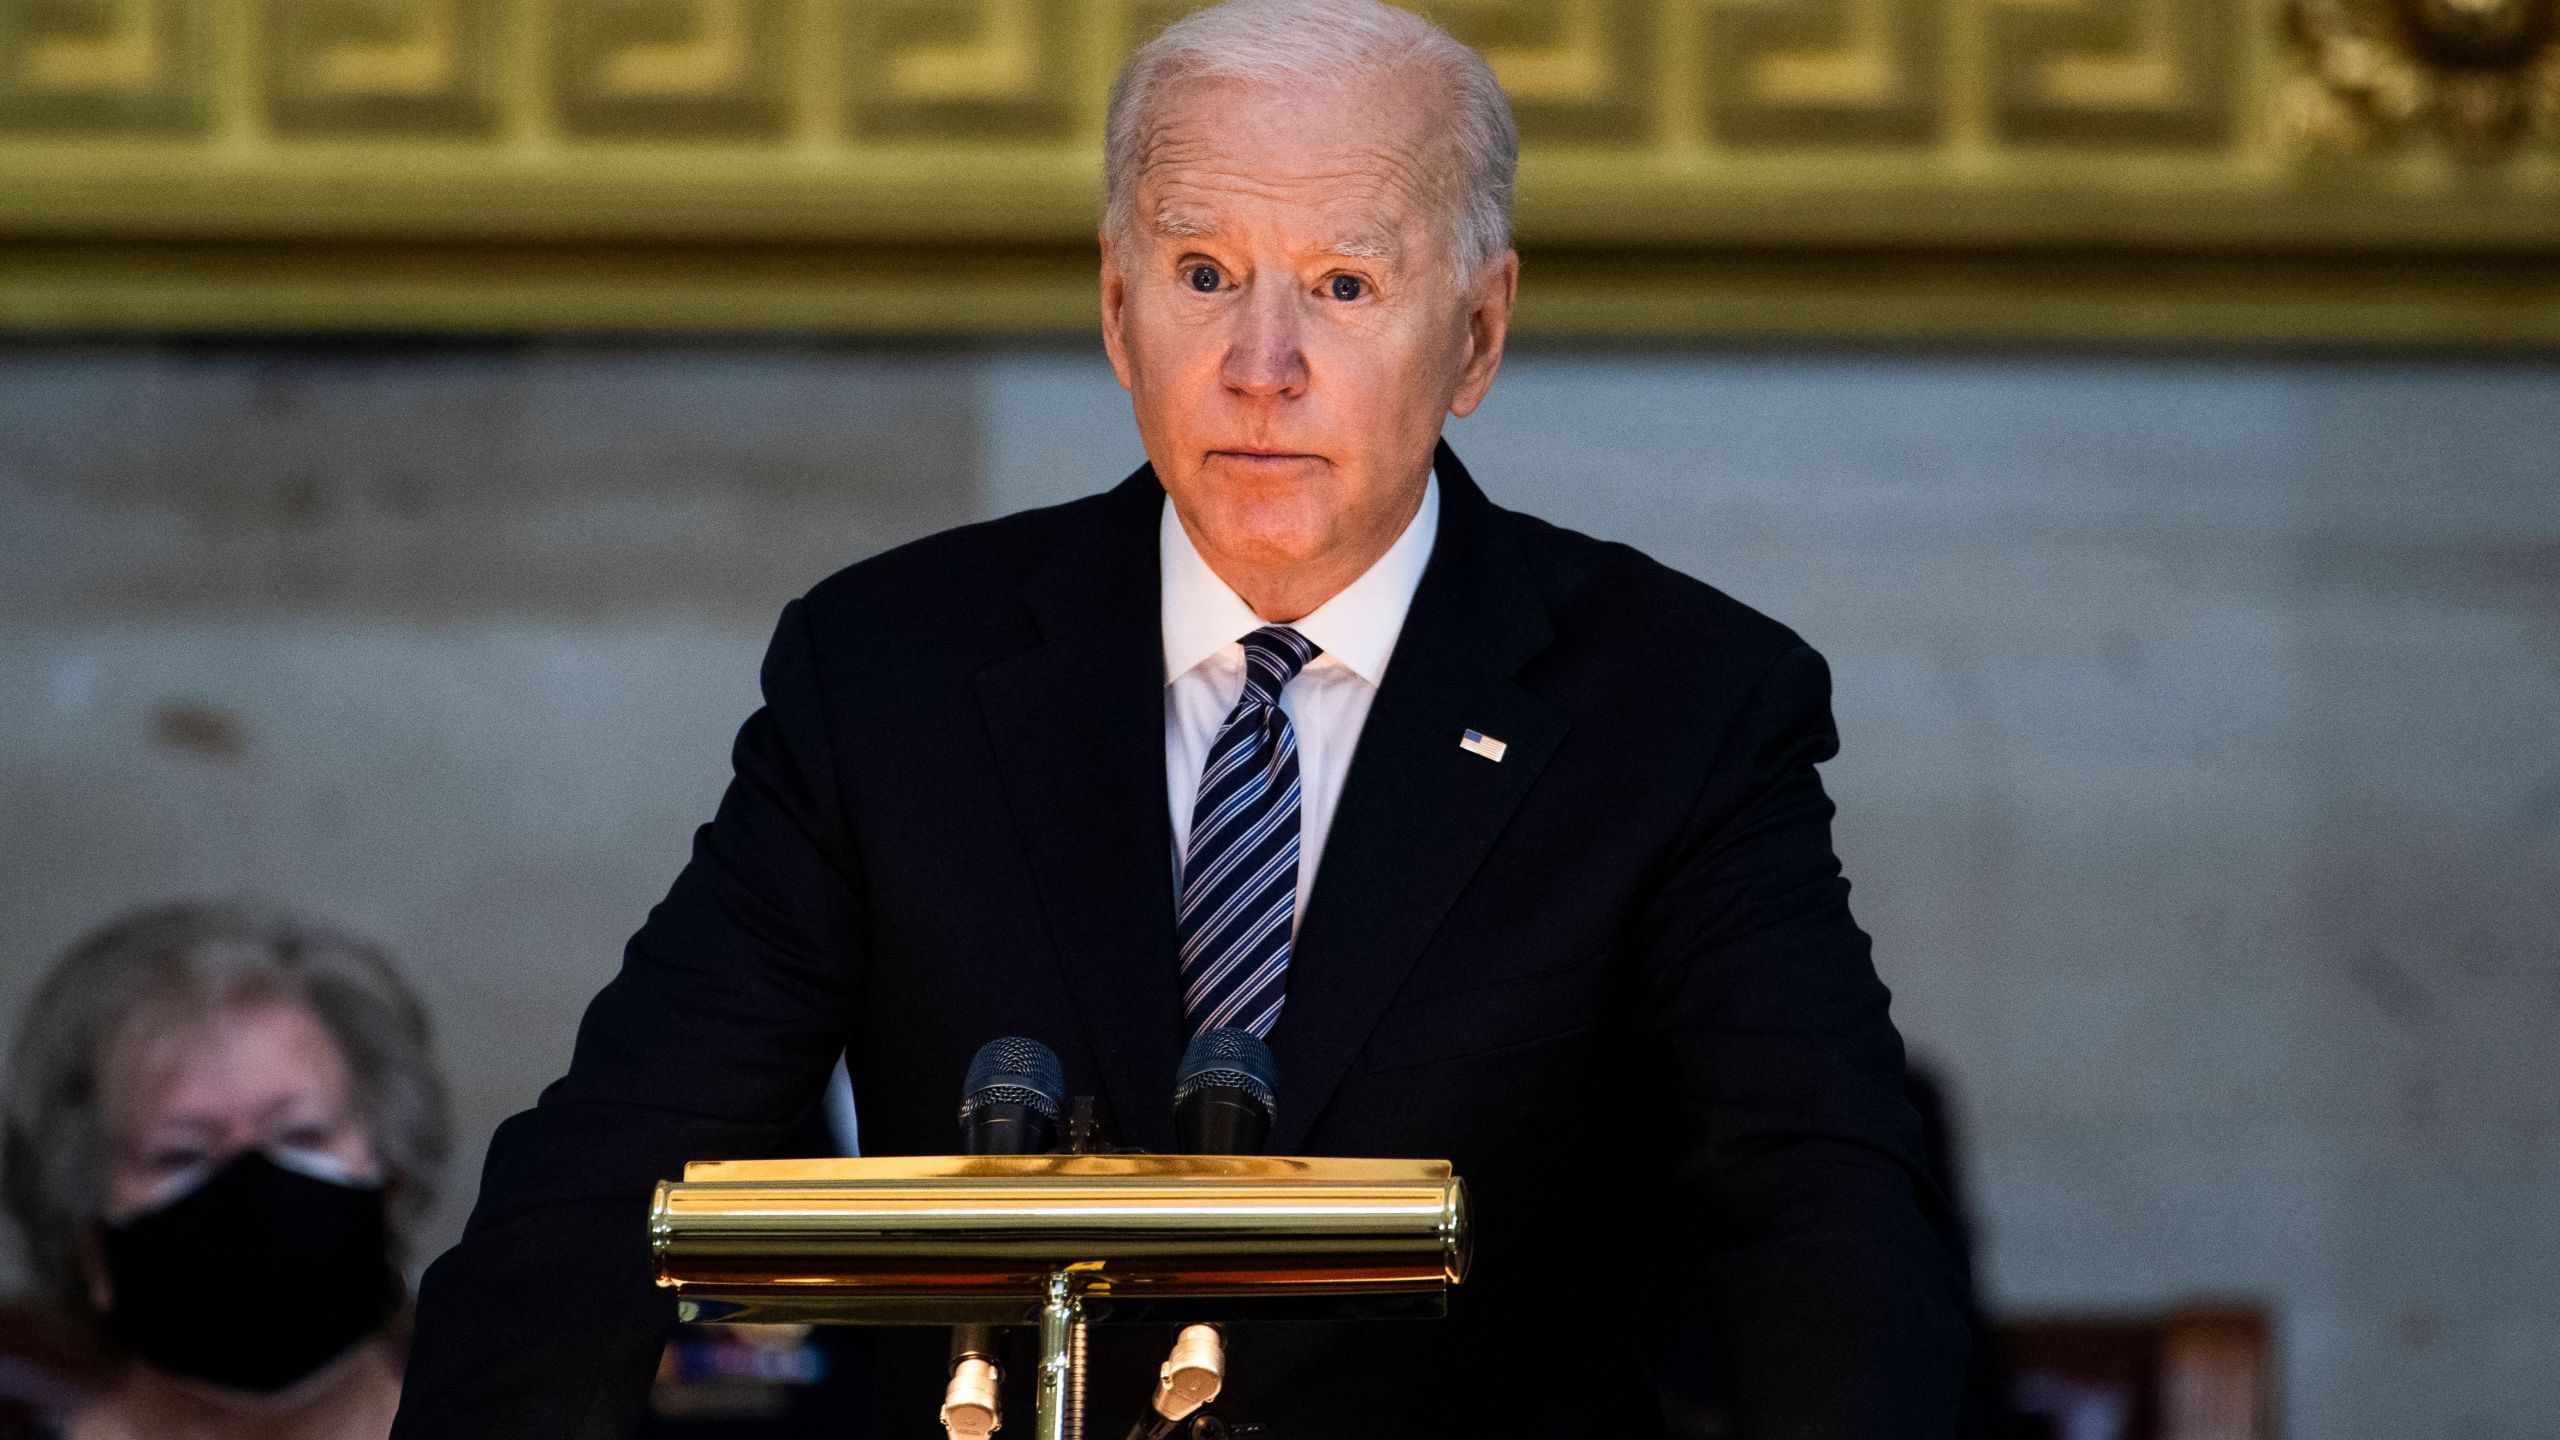 President Joe Biden to address Congress on April 28